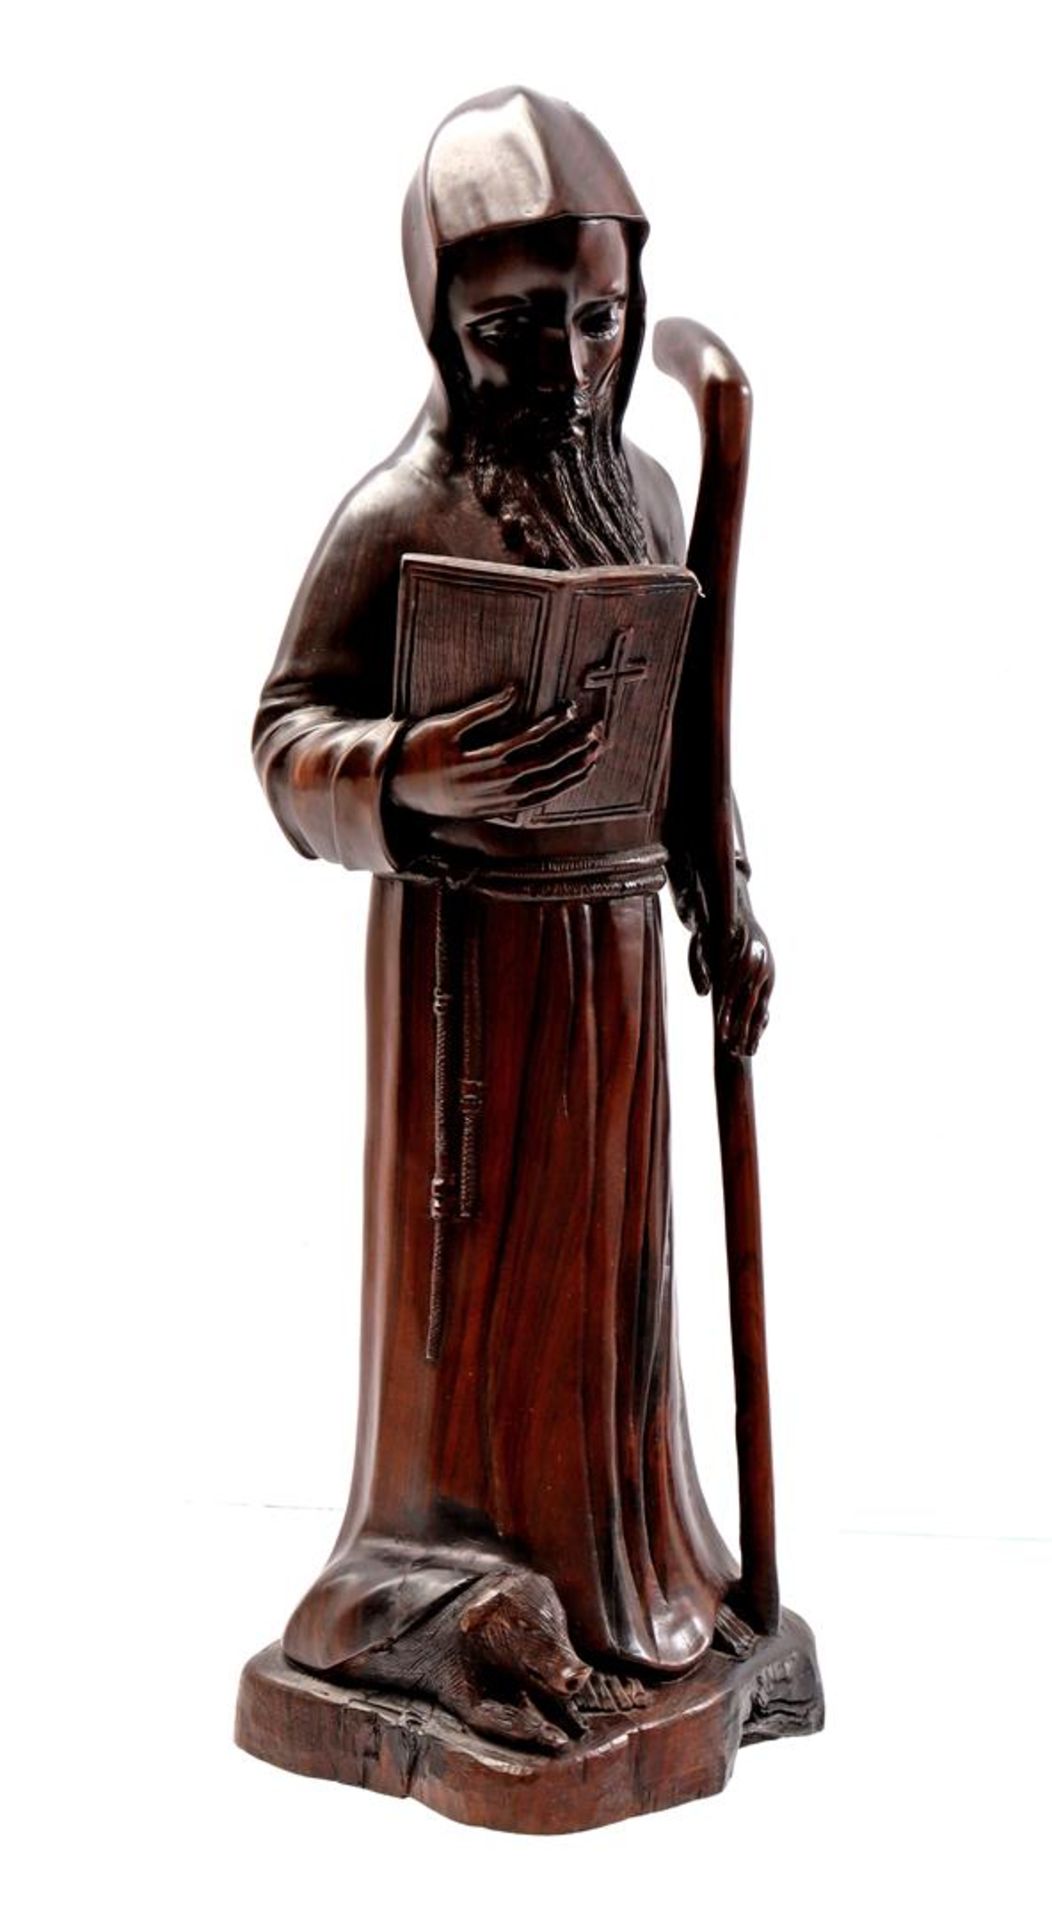 Coromandel wooden statue